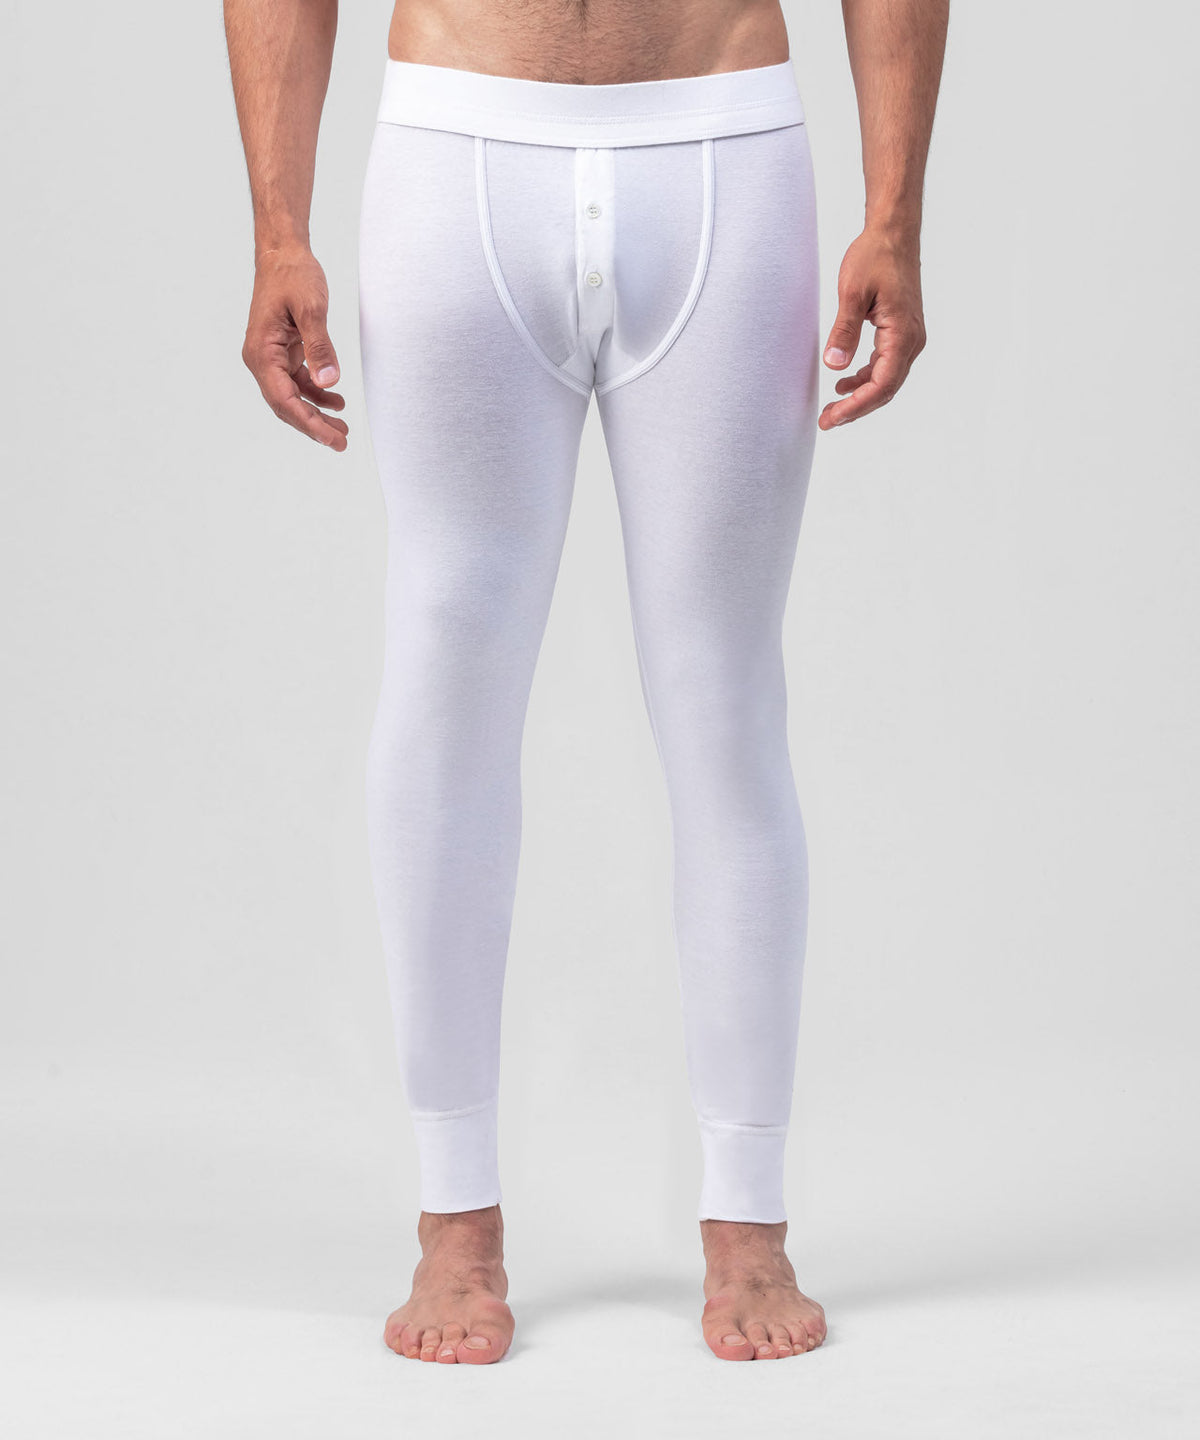  Men's Thermal Underwear - White / Men's Thermal